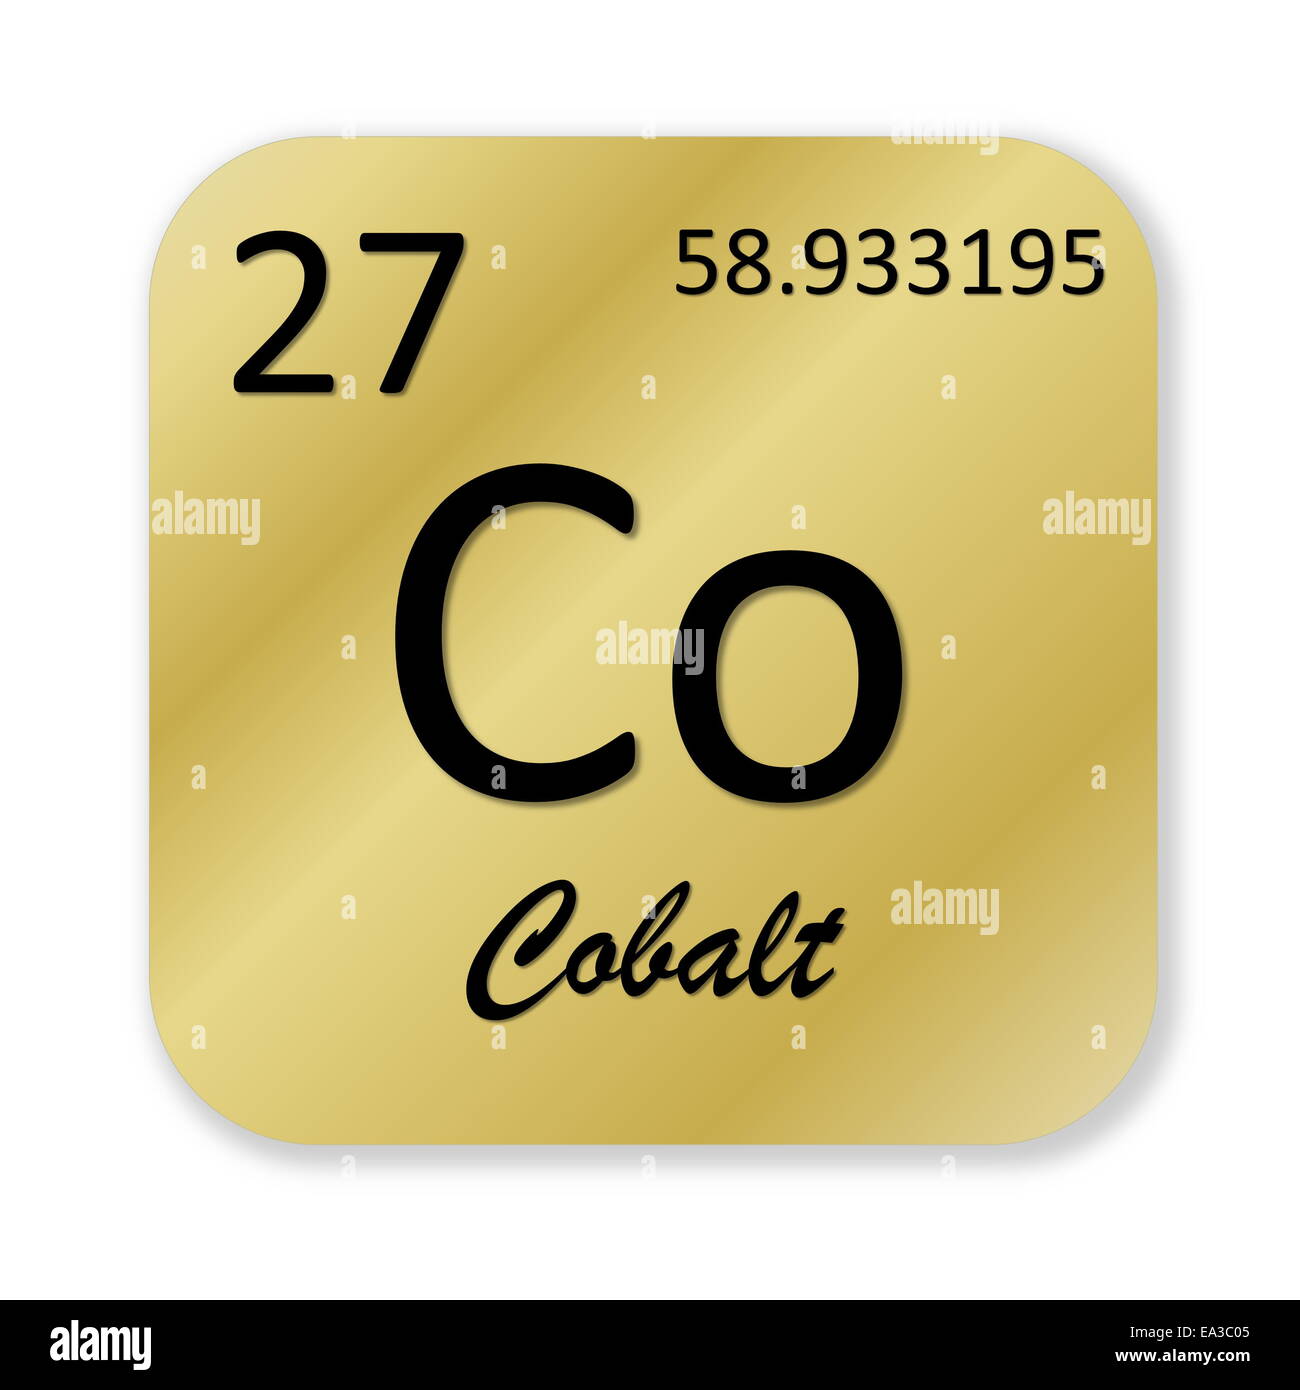 Cobalt element Stock Photo